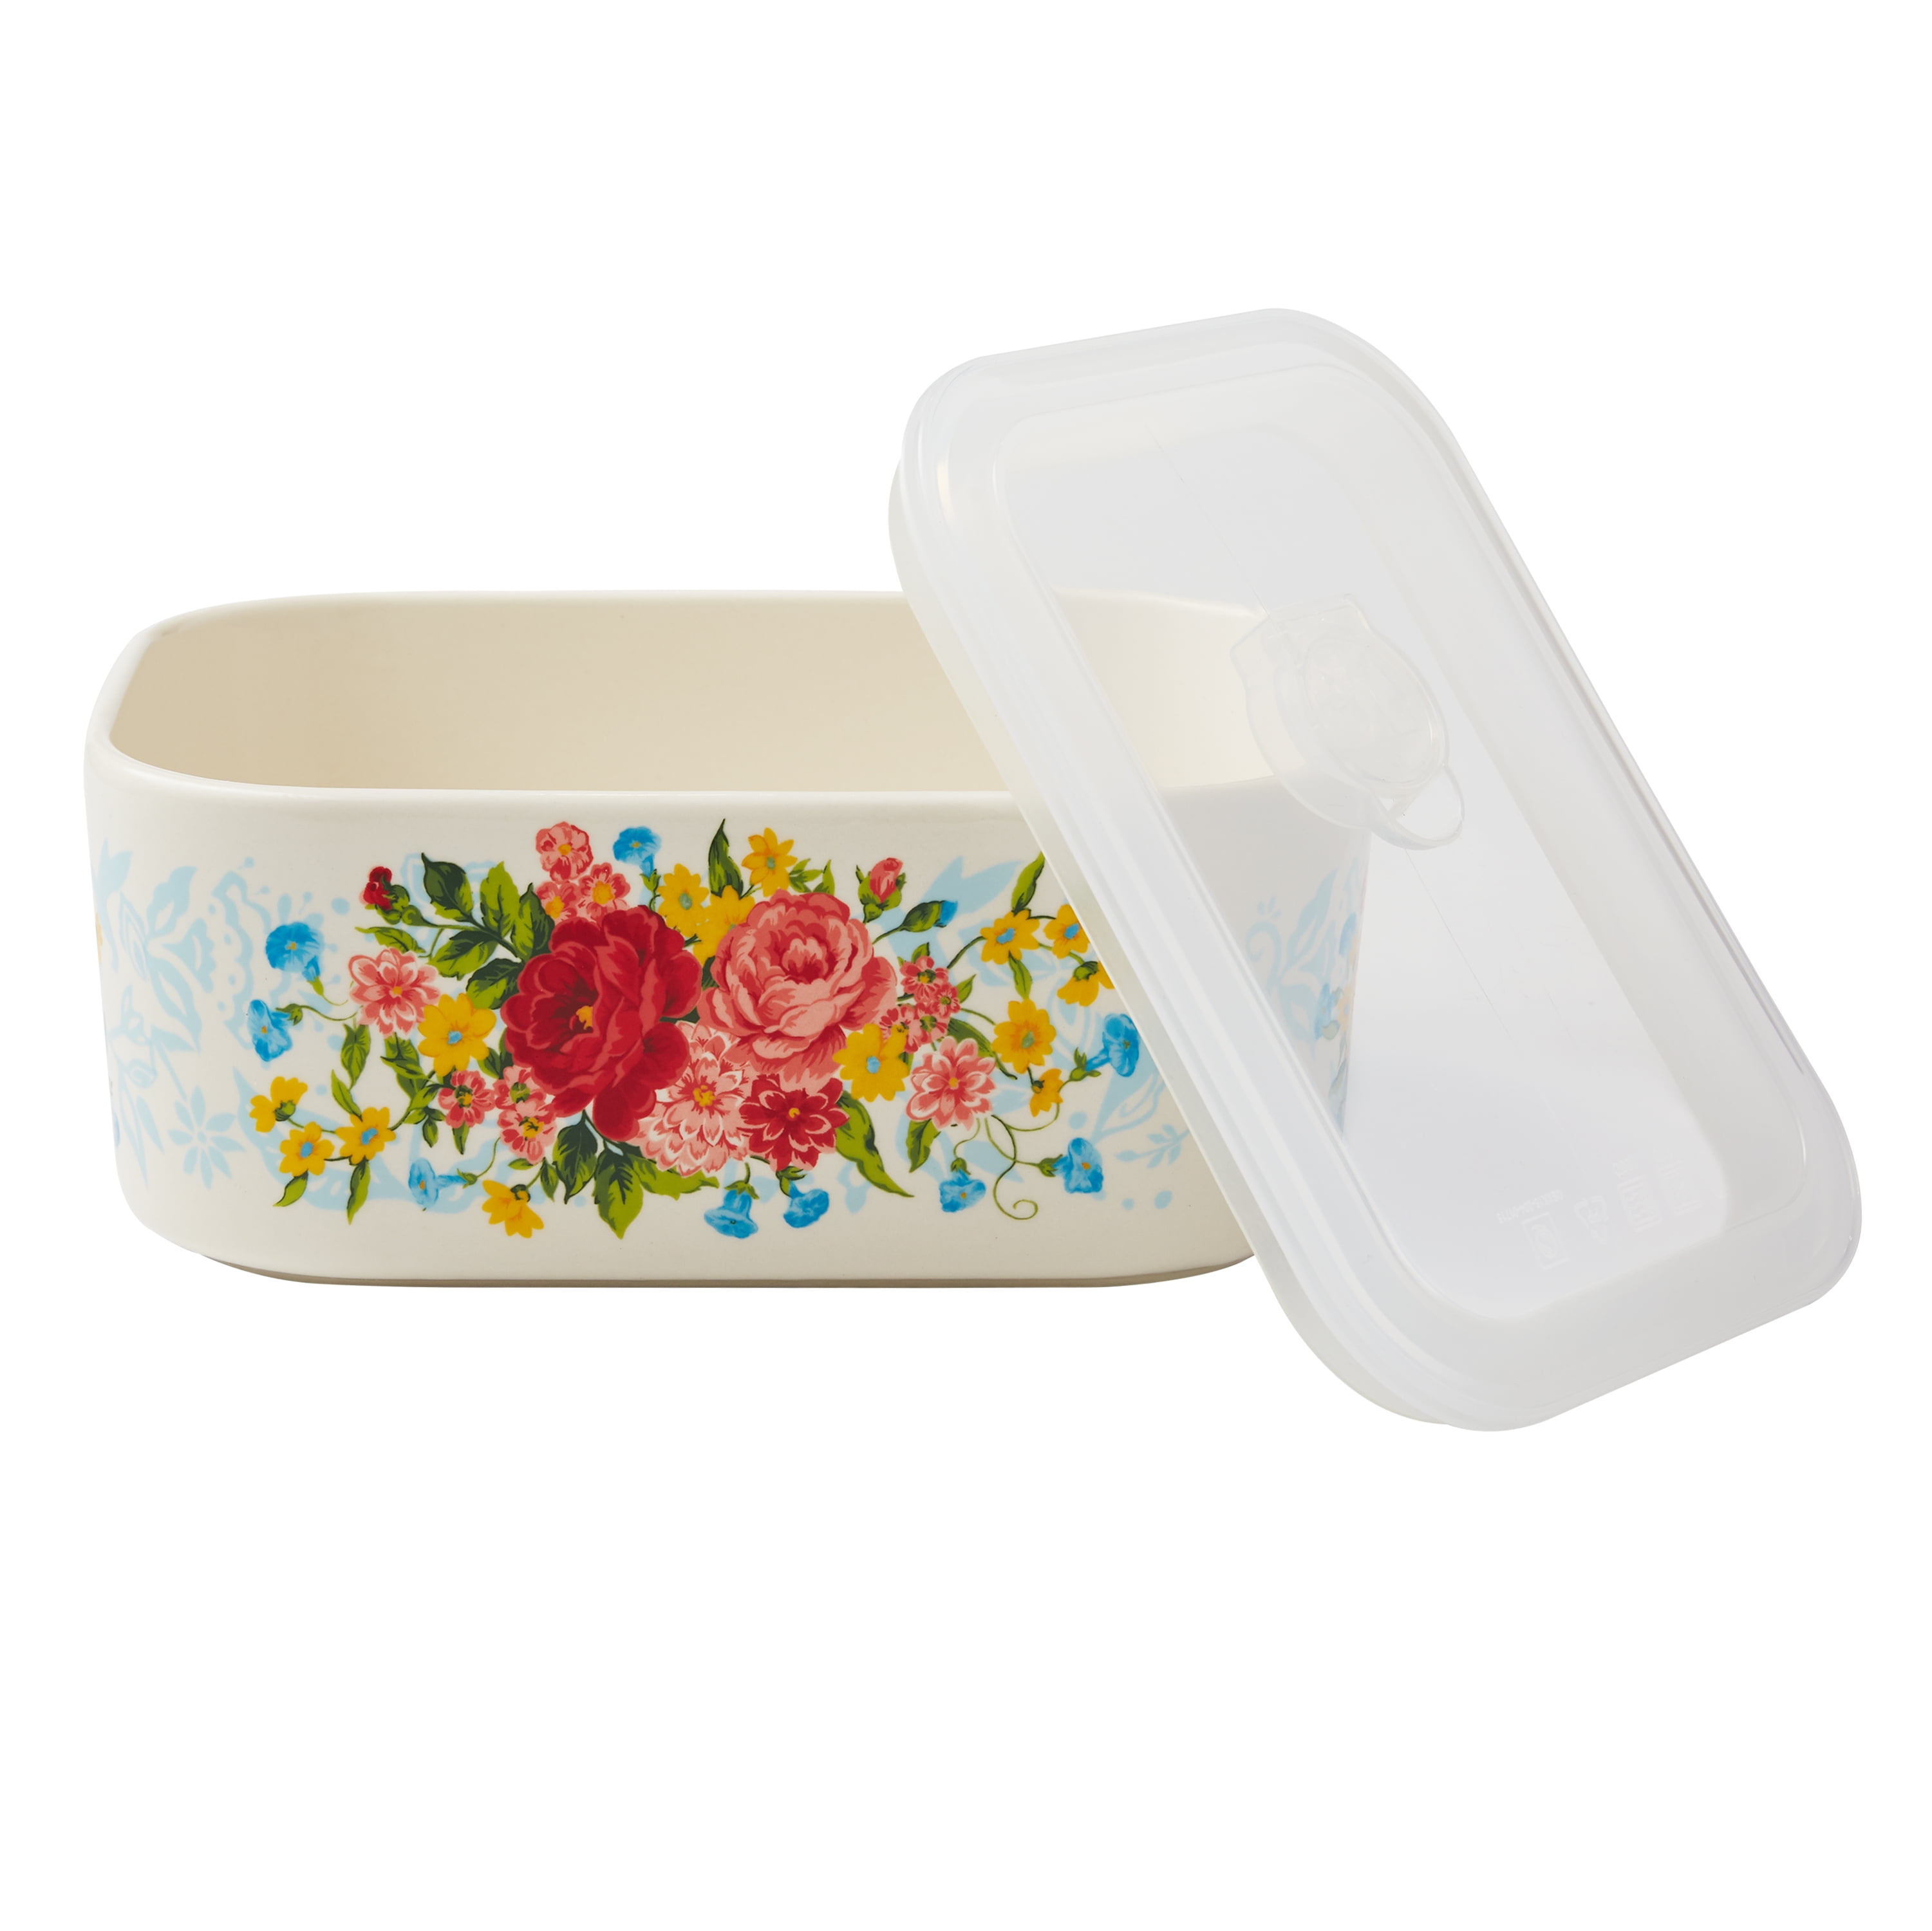 The Pioneer Woman Sweet Rose Rectangle Ceramic Nesting Bowl Set, 6